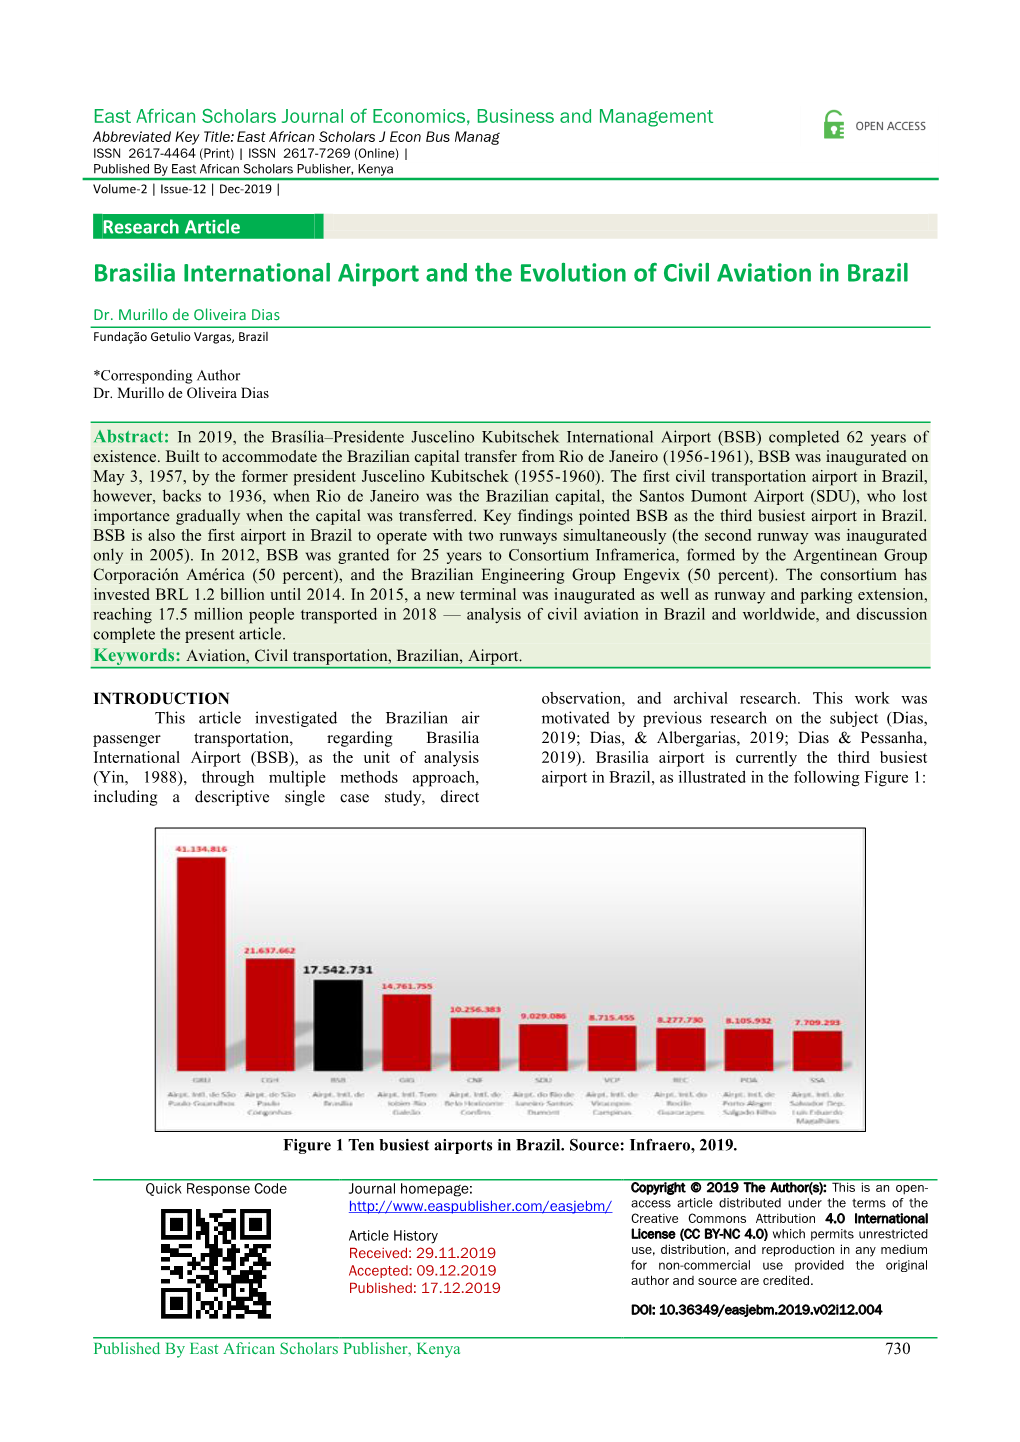 Brasilia International Airport and the Evolution of Civil Aviation in Brazil